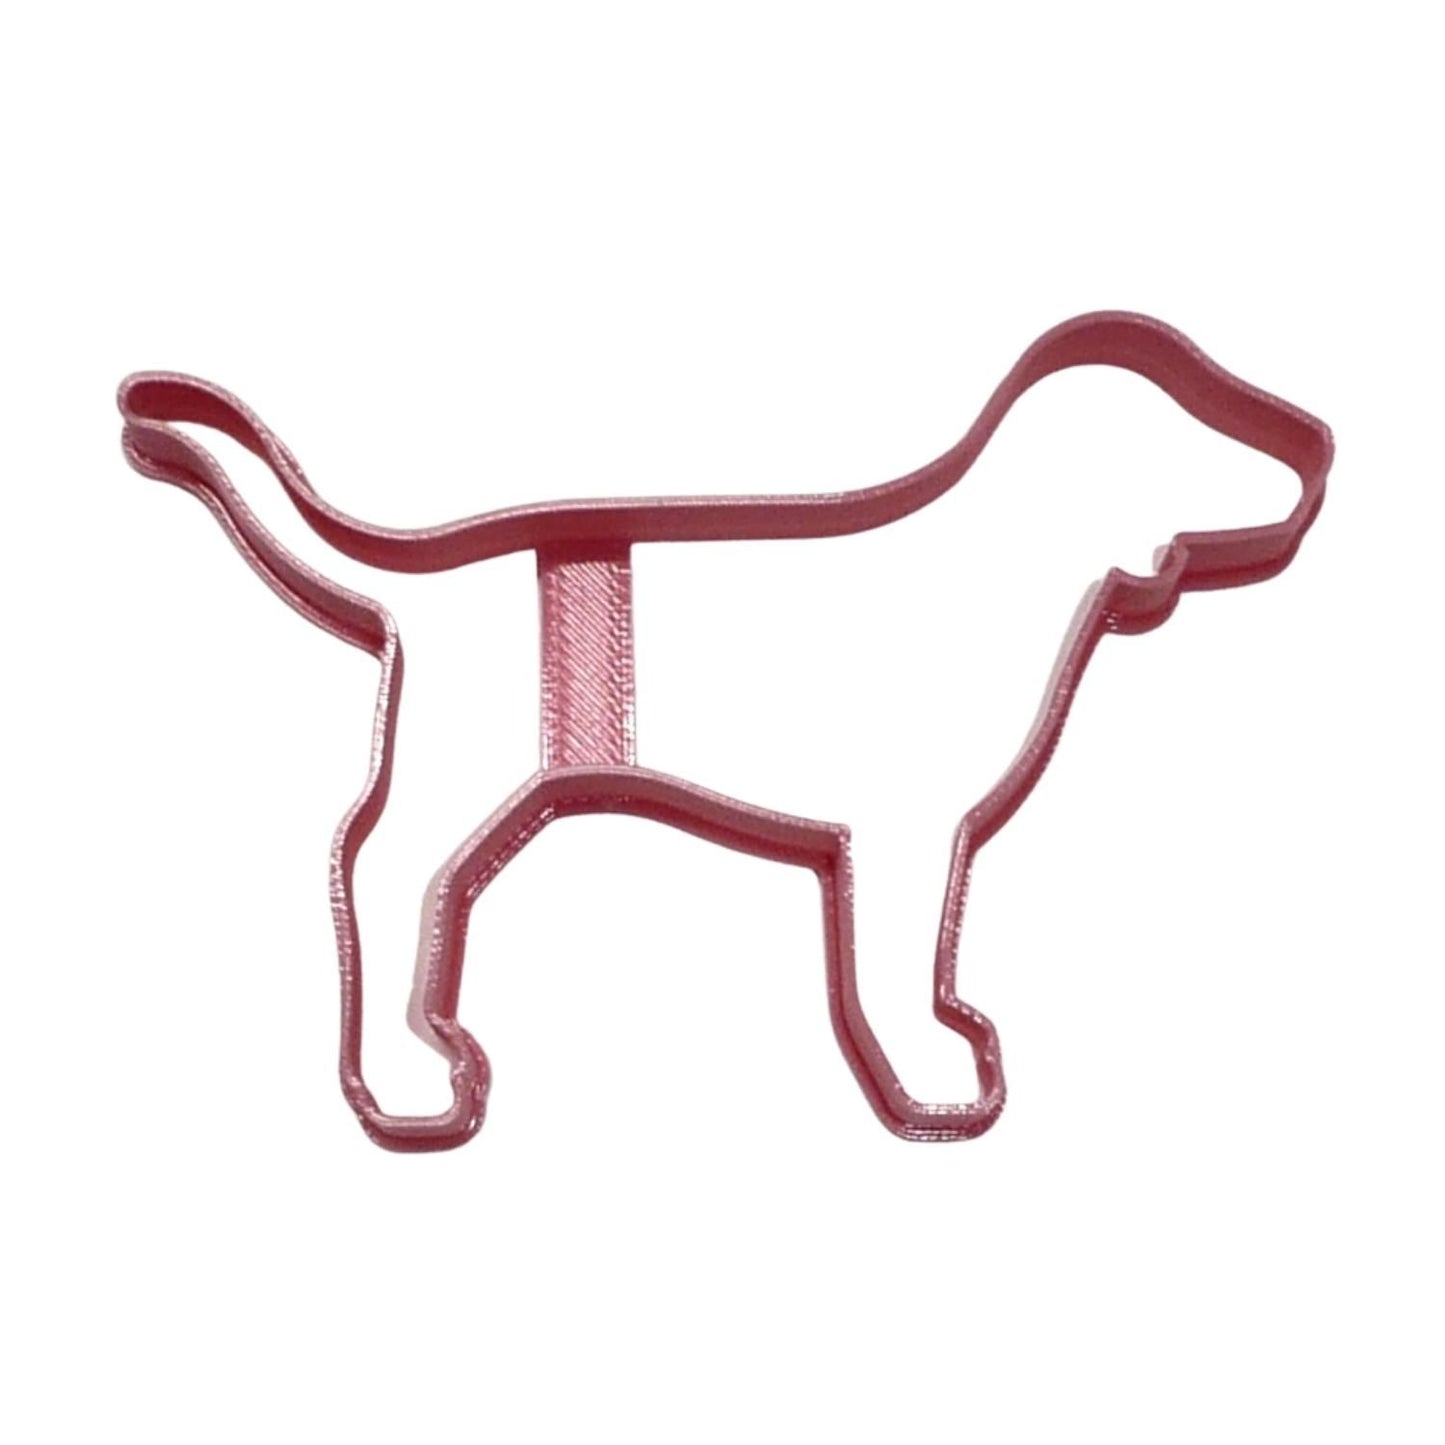 PINK Dog Outline Victorias Secret Fashion Brand Cookie Cutter Made in USA PR4658